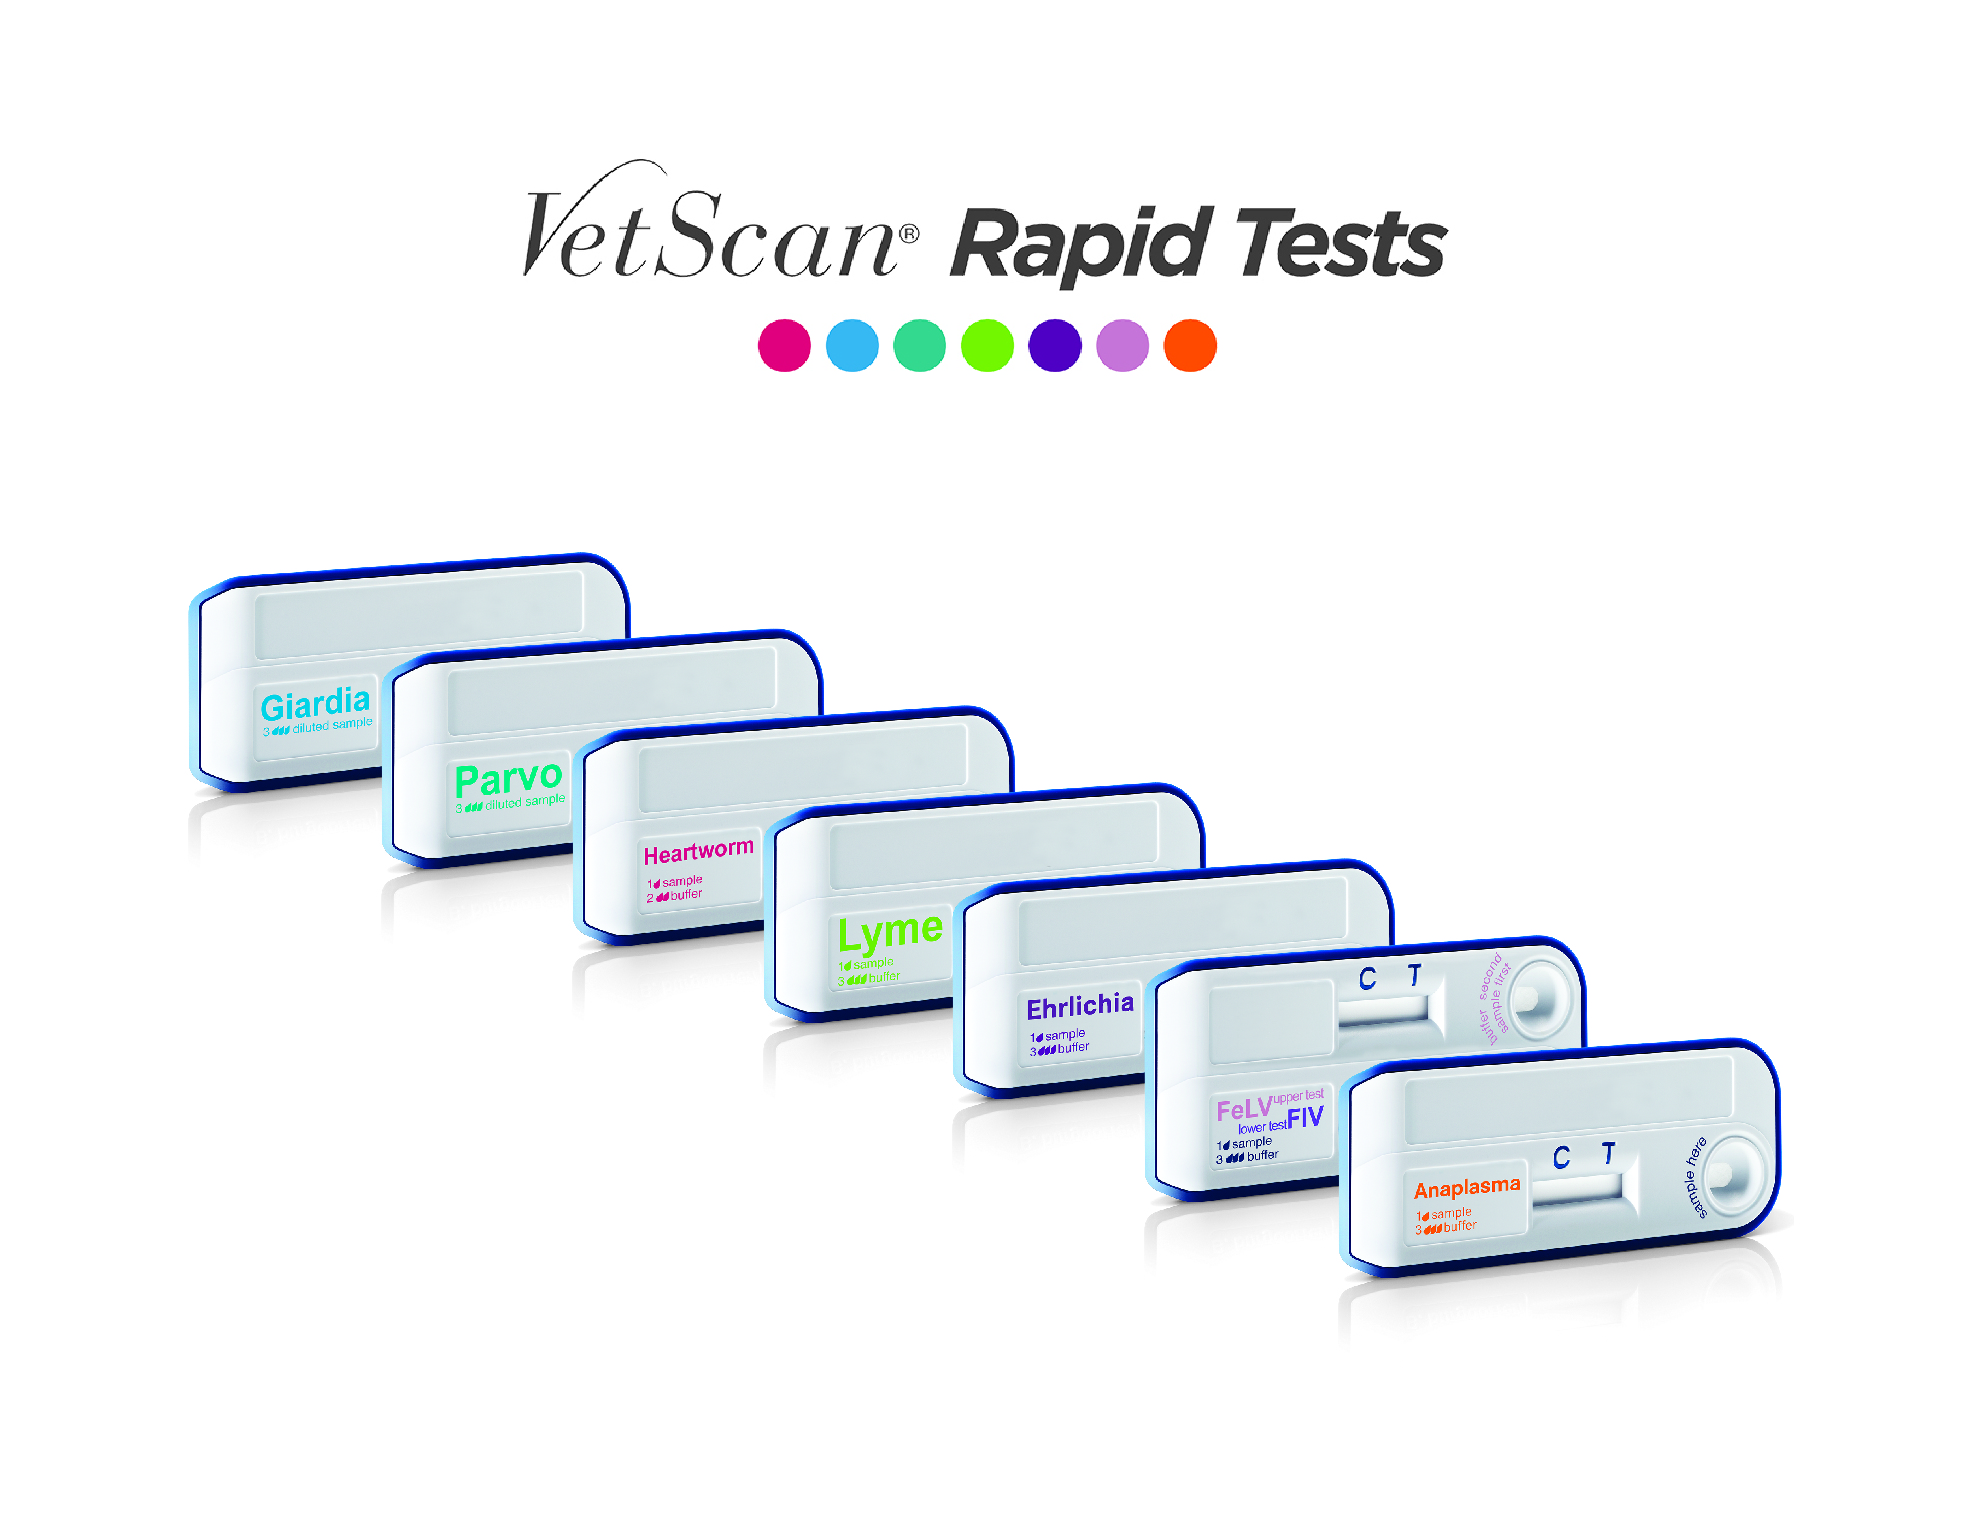 VetScan Rapid Tests